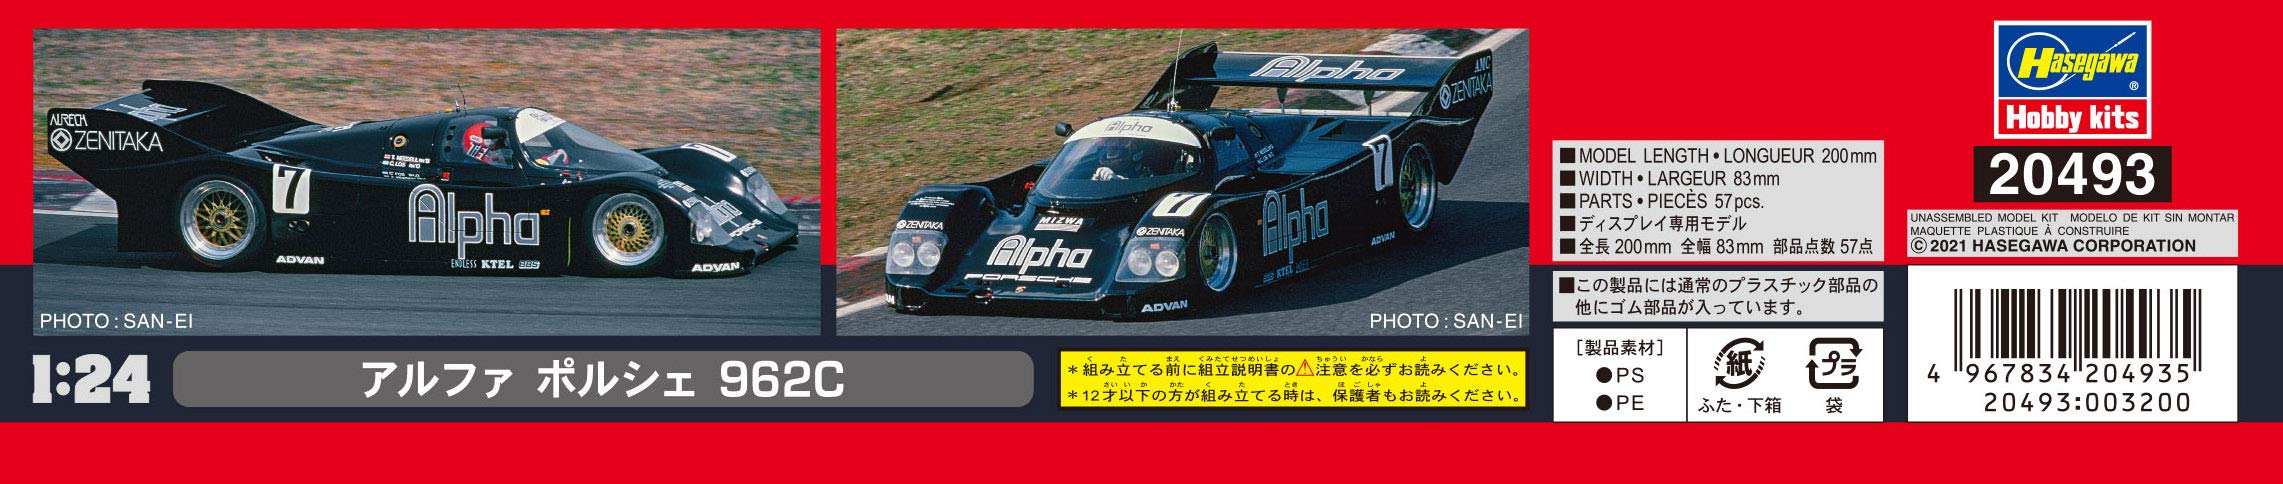 Hasegawa 1/24 Alpha Porsche 962C Japanese Scale Model Kit Plastic Racing Cars